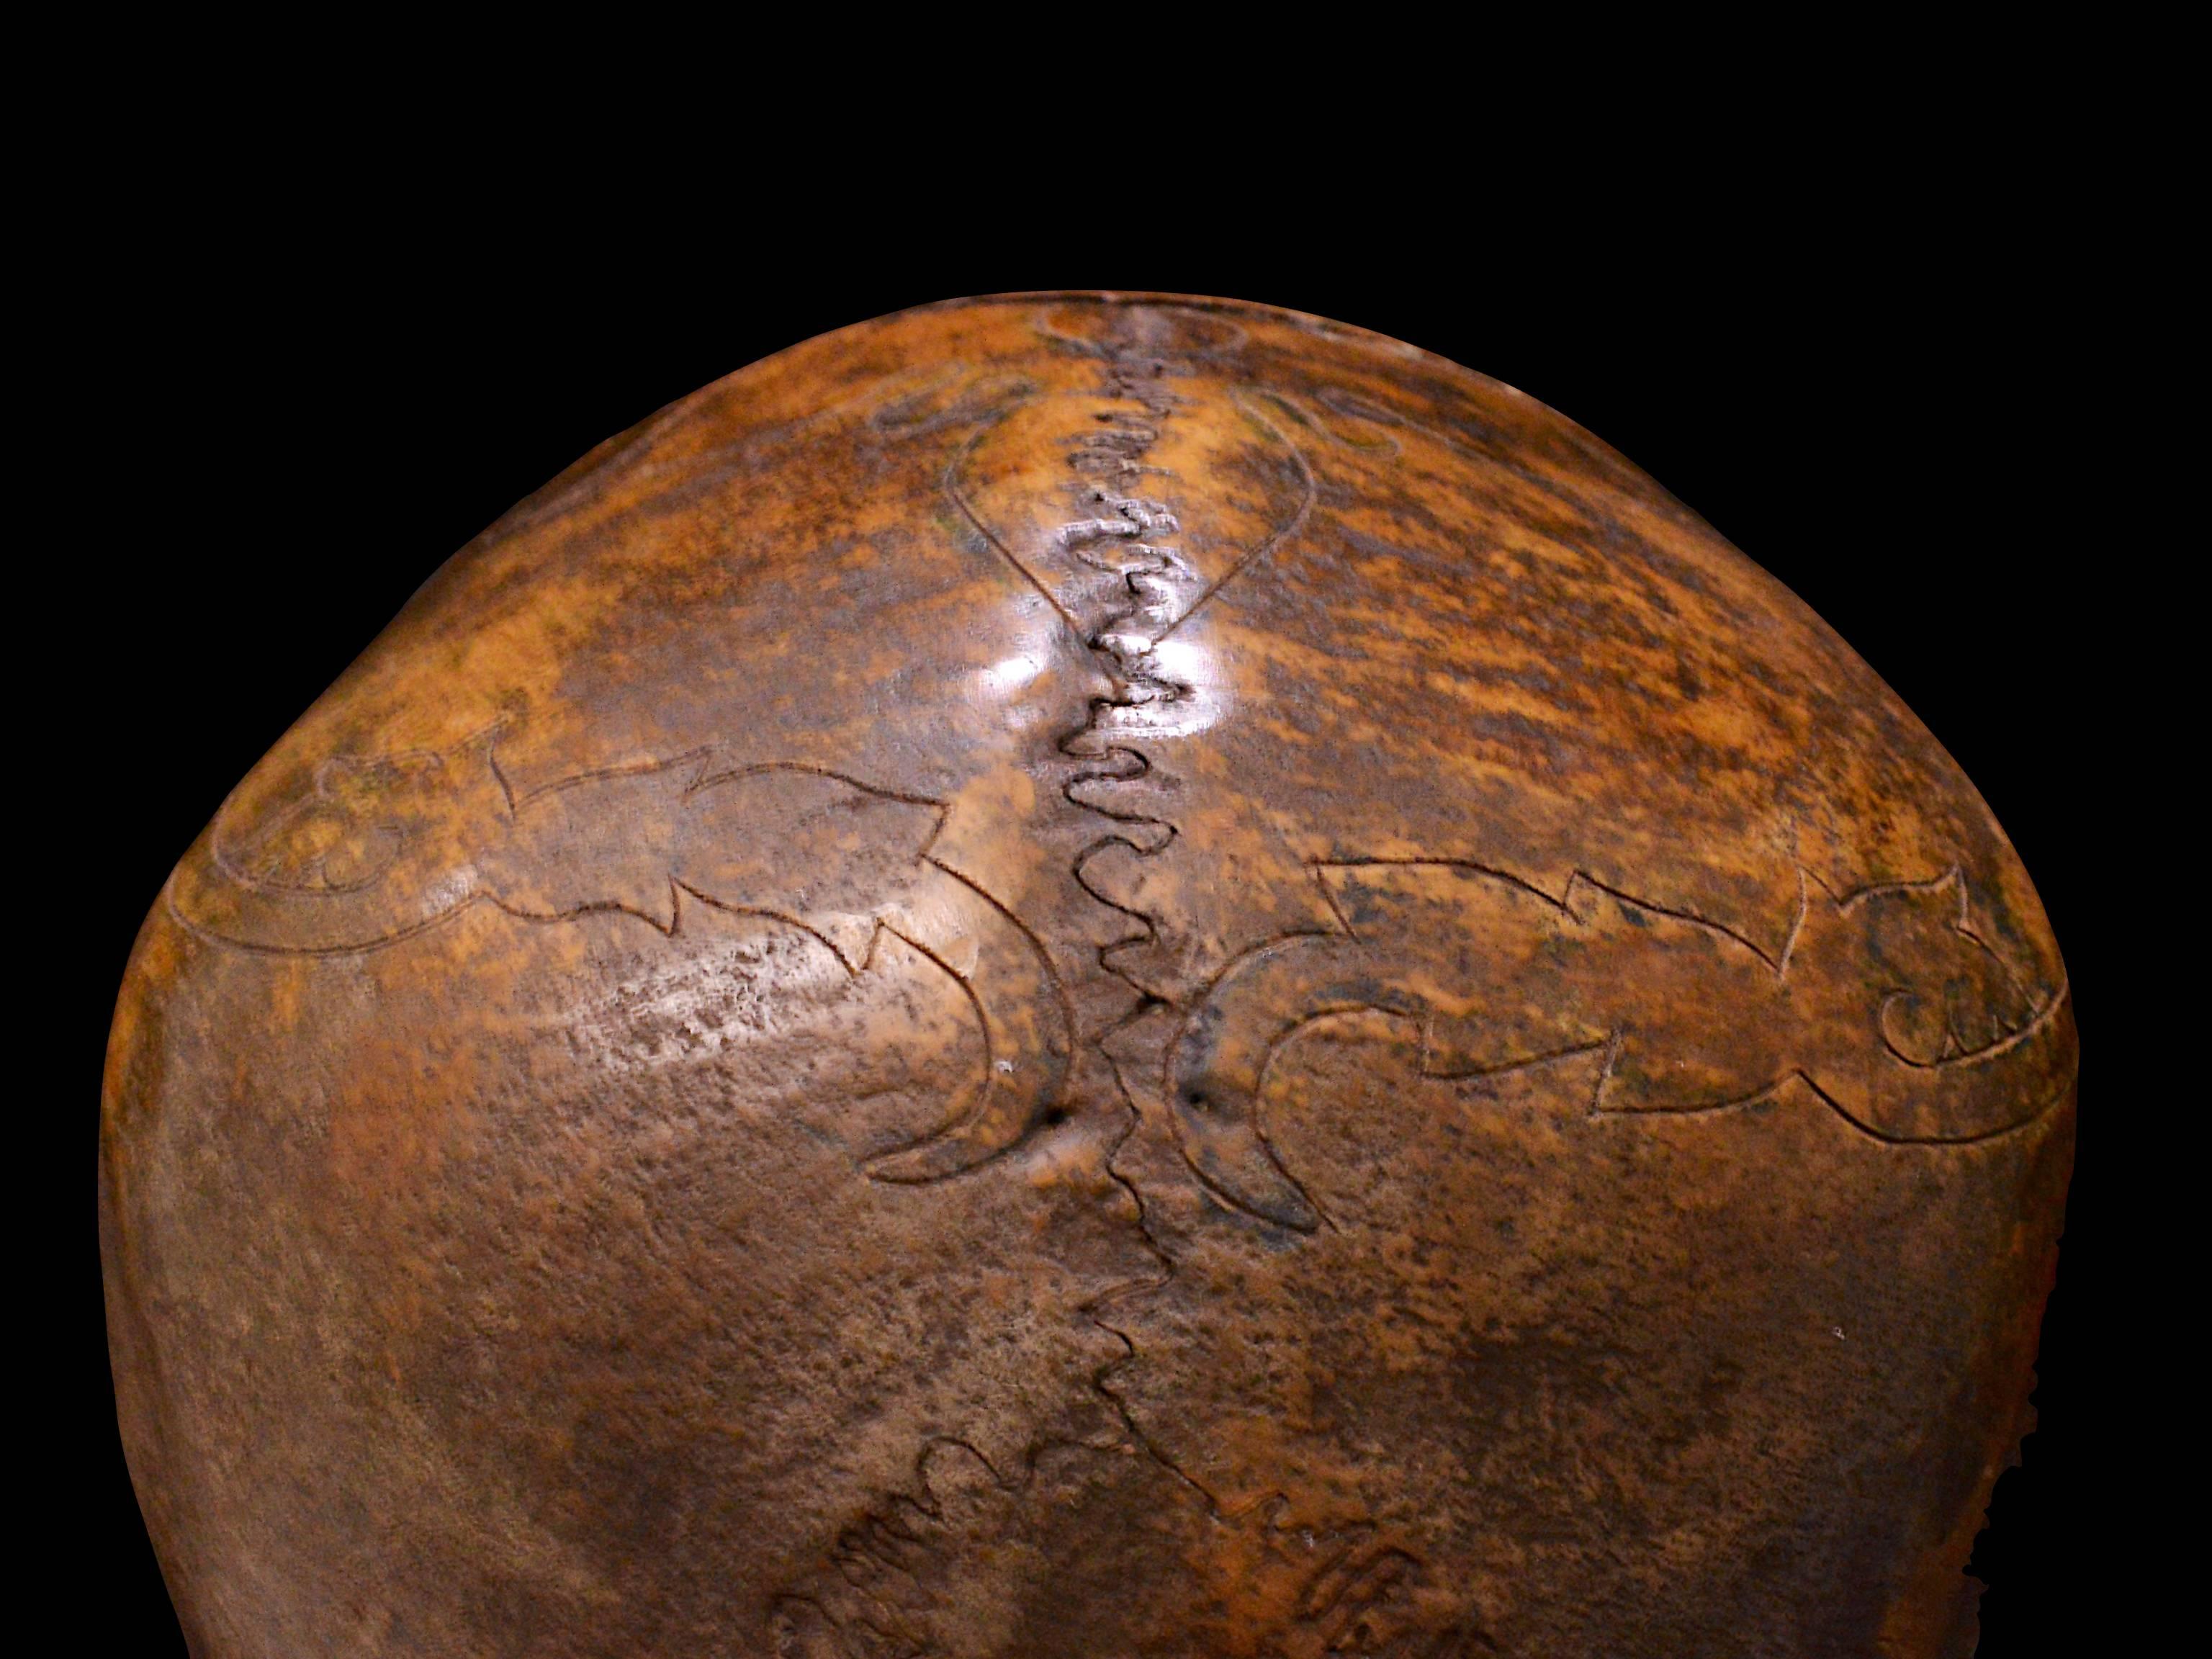 Carved Striking Dayak Human Trophee Skull ‘Ndaokus’ from Borneo Indonesia